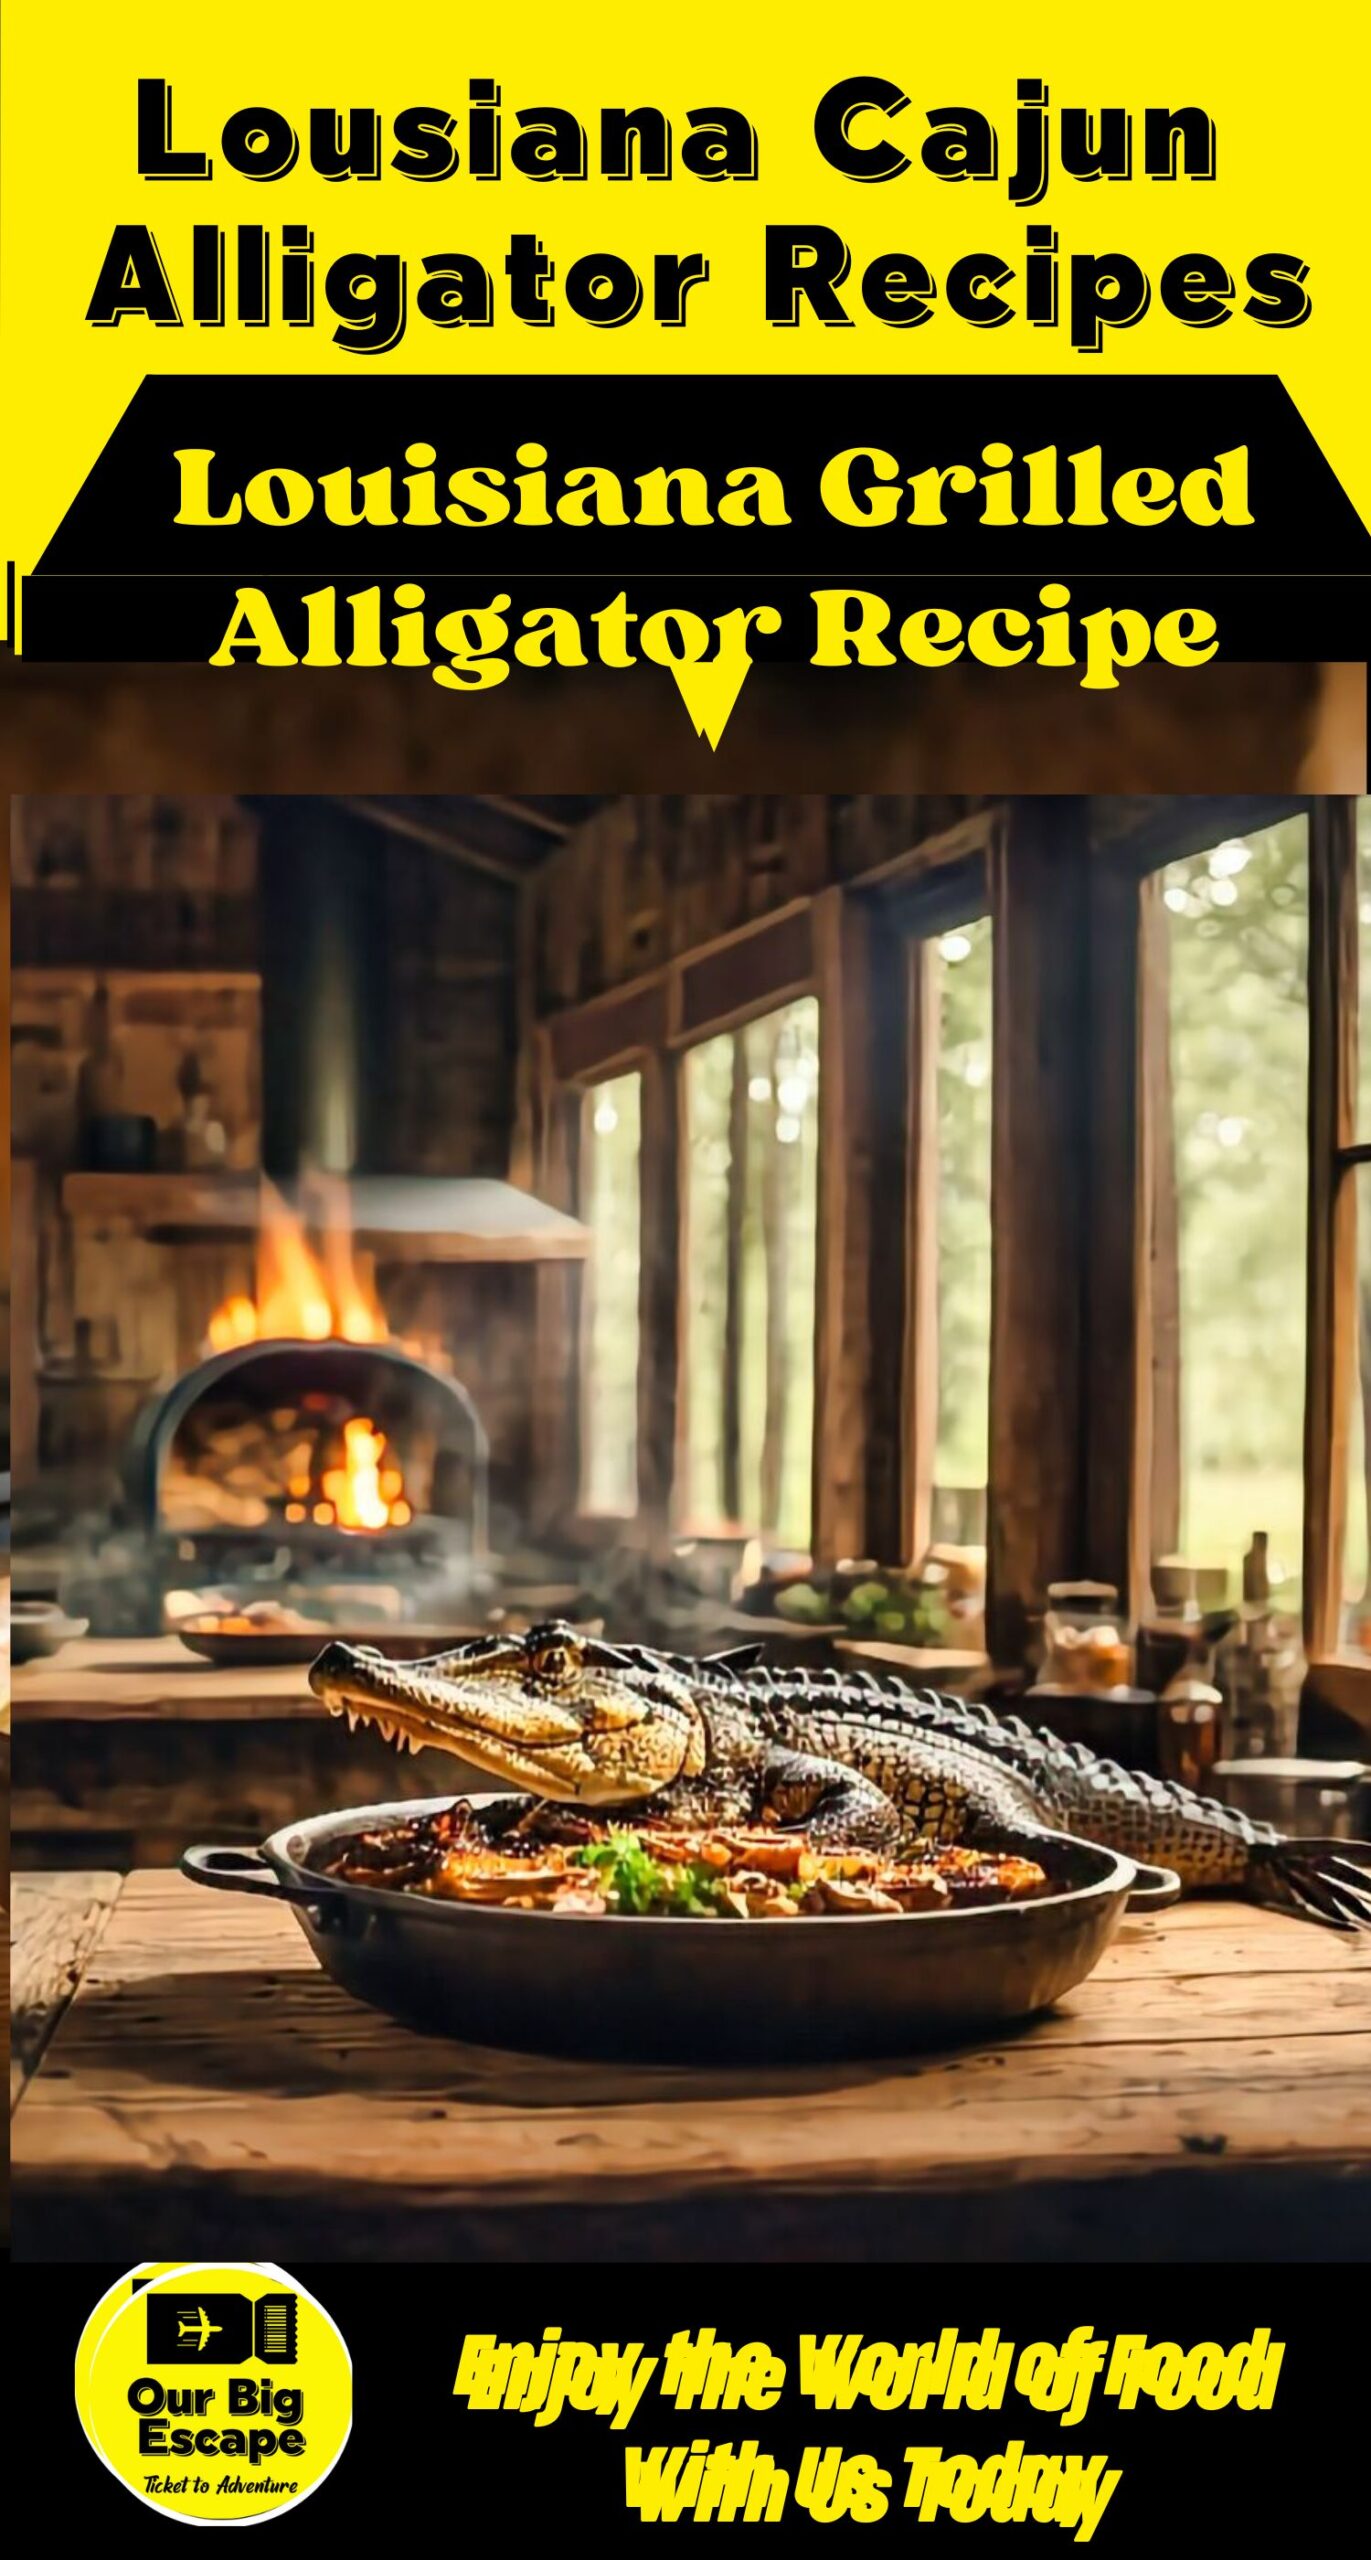 Louisiana Grilled Alligator Recipe